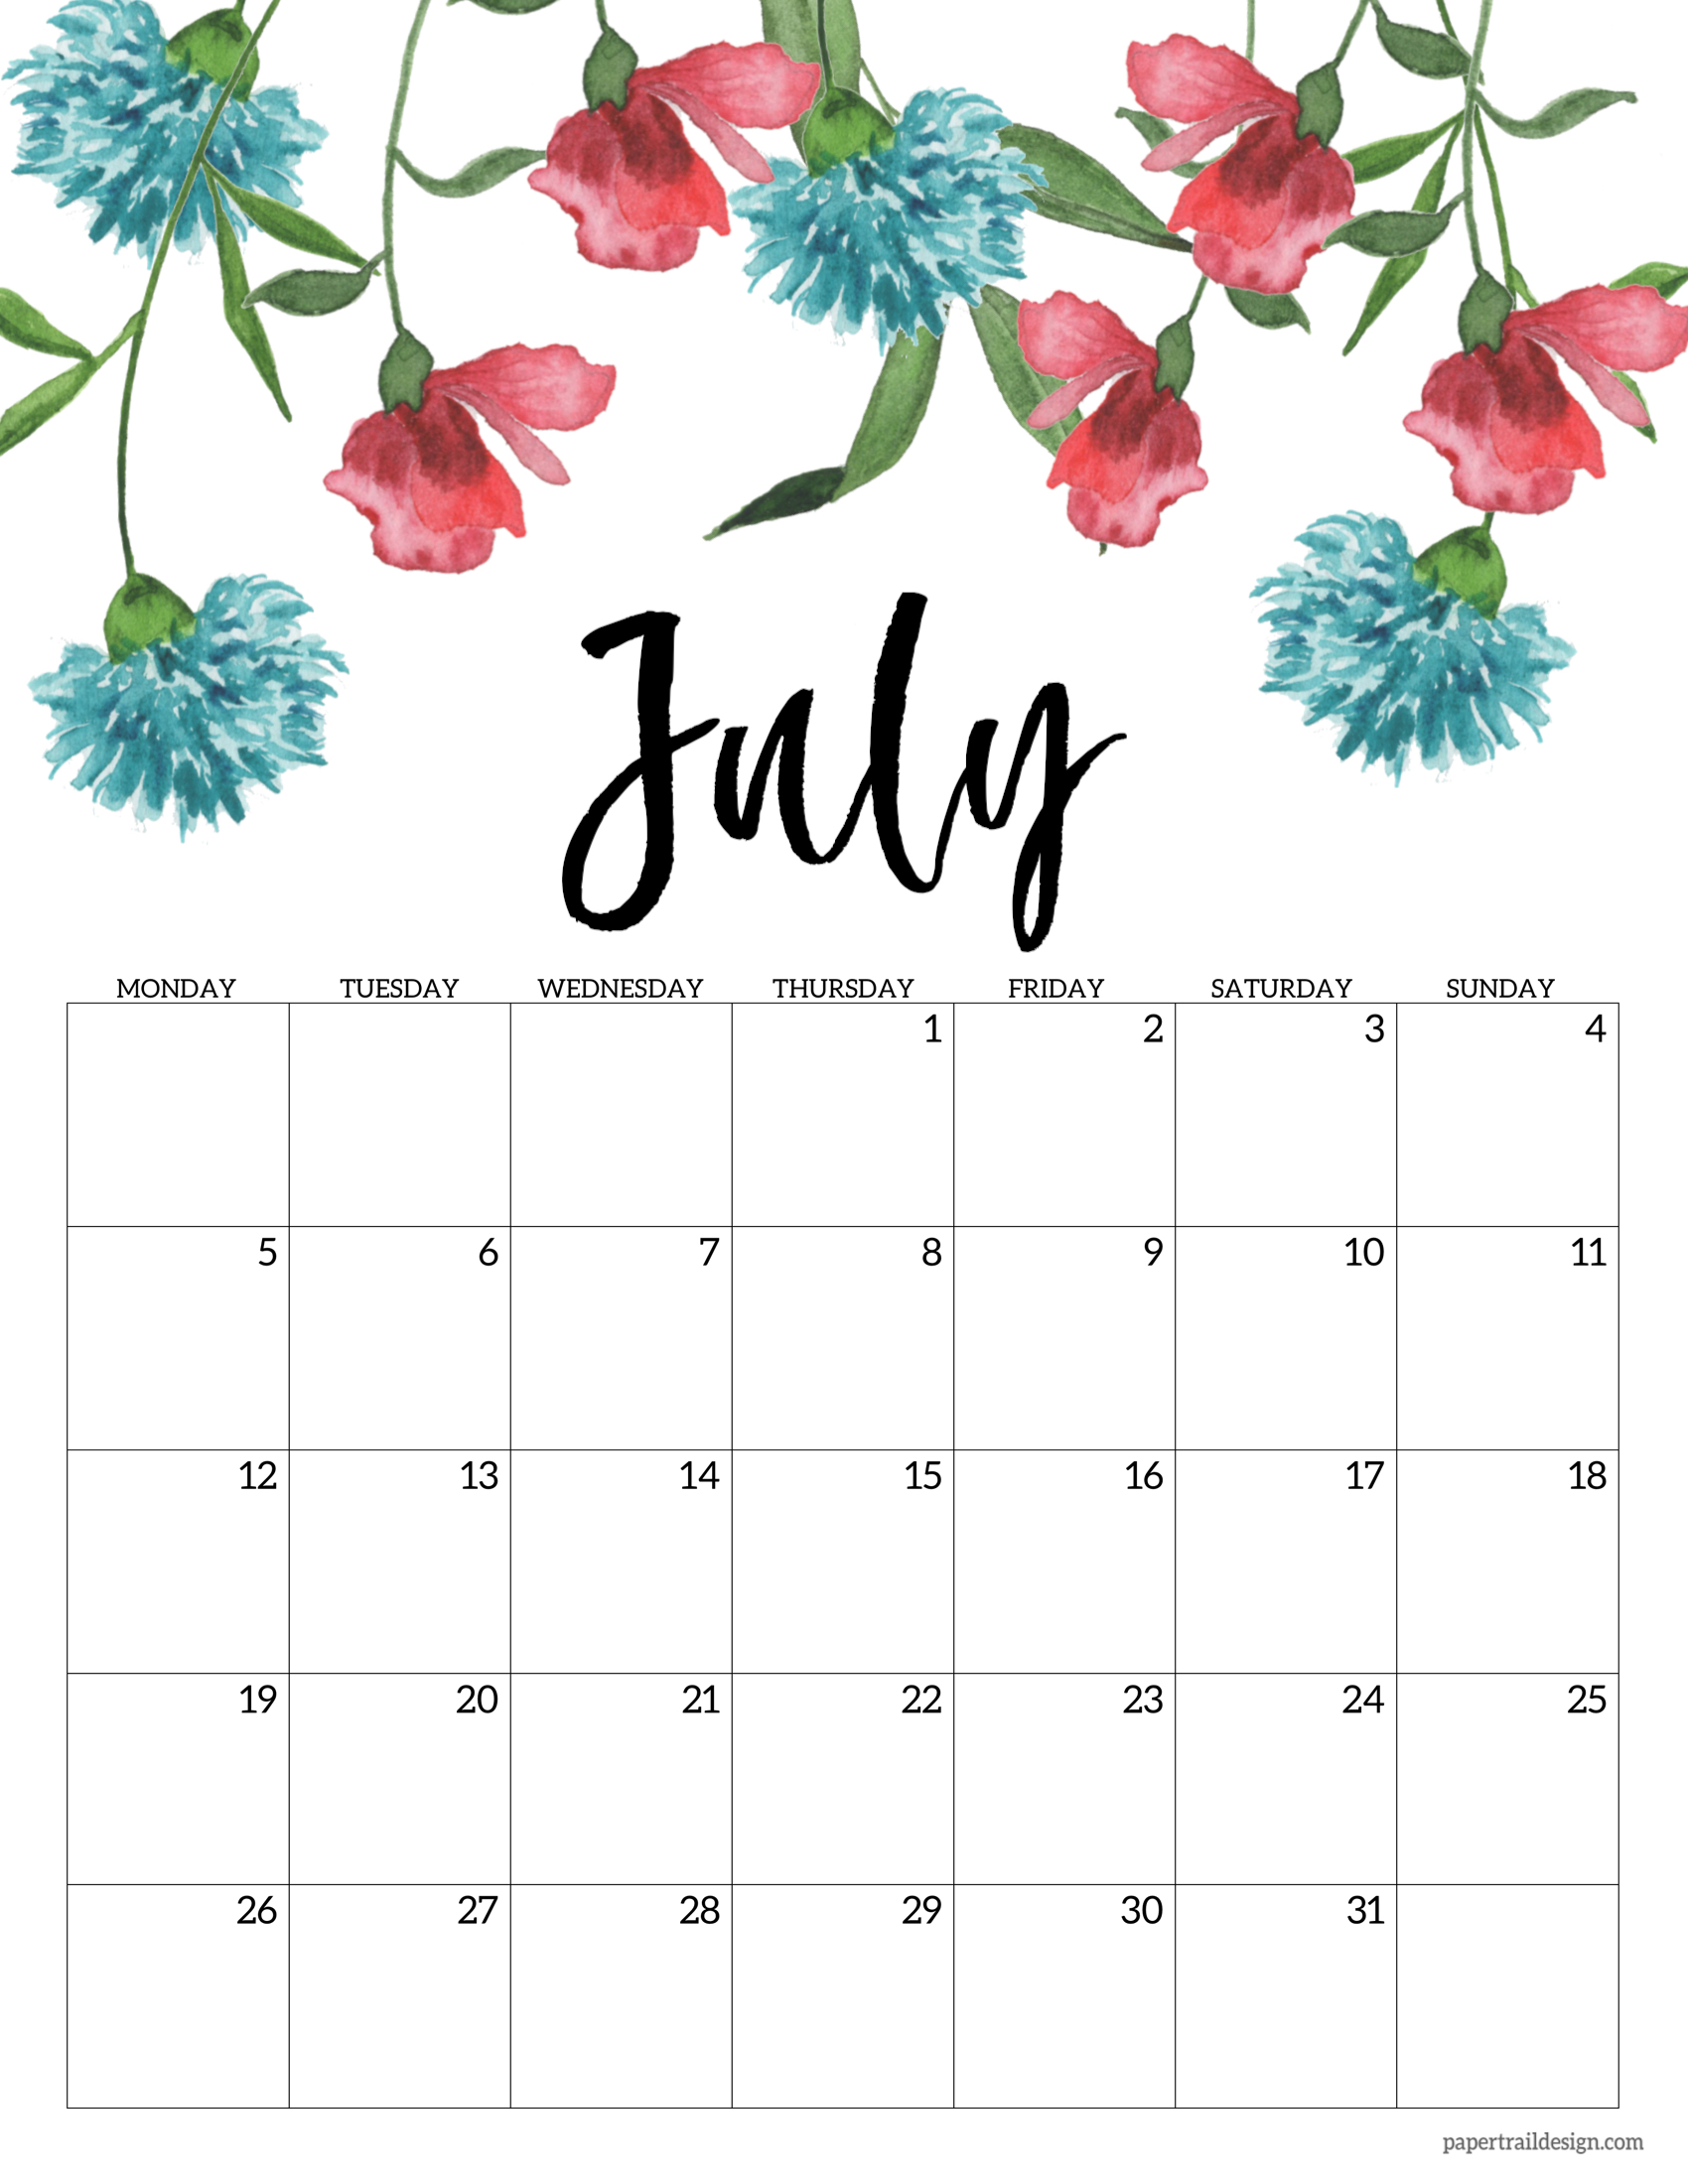 Free Printable 2021 Floral Calendar - Monday Start | Paper ...